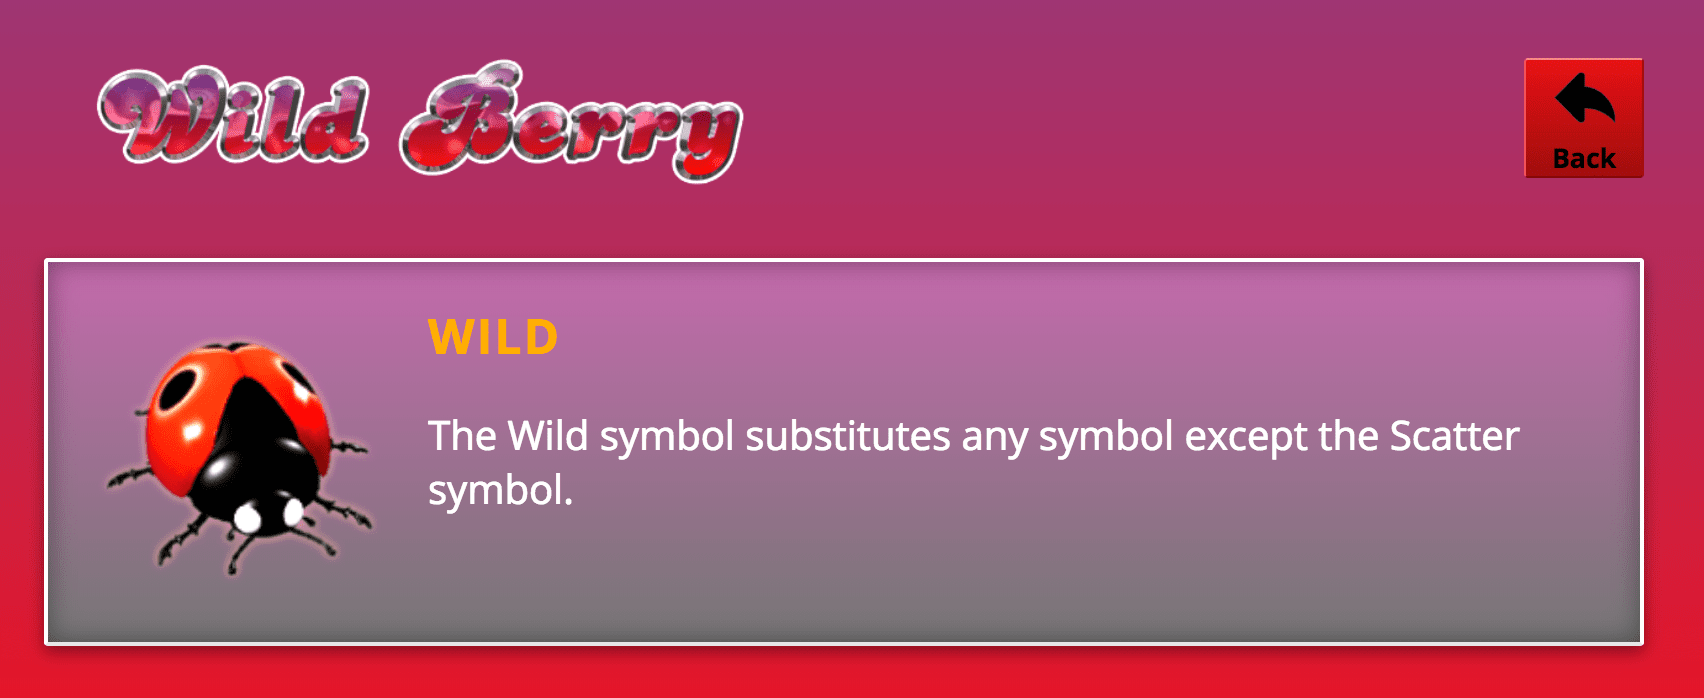 wild berry game slots help